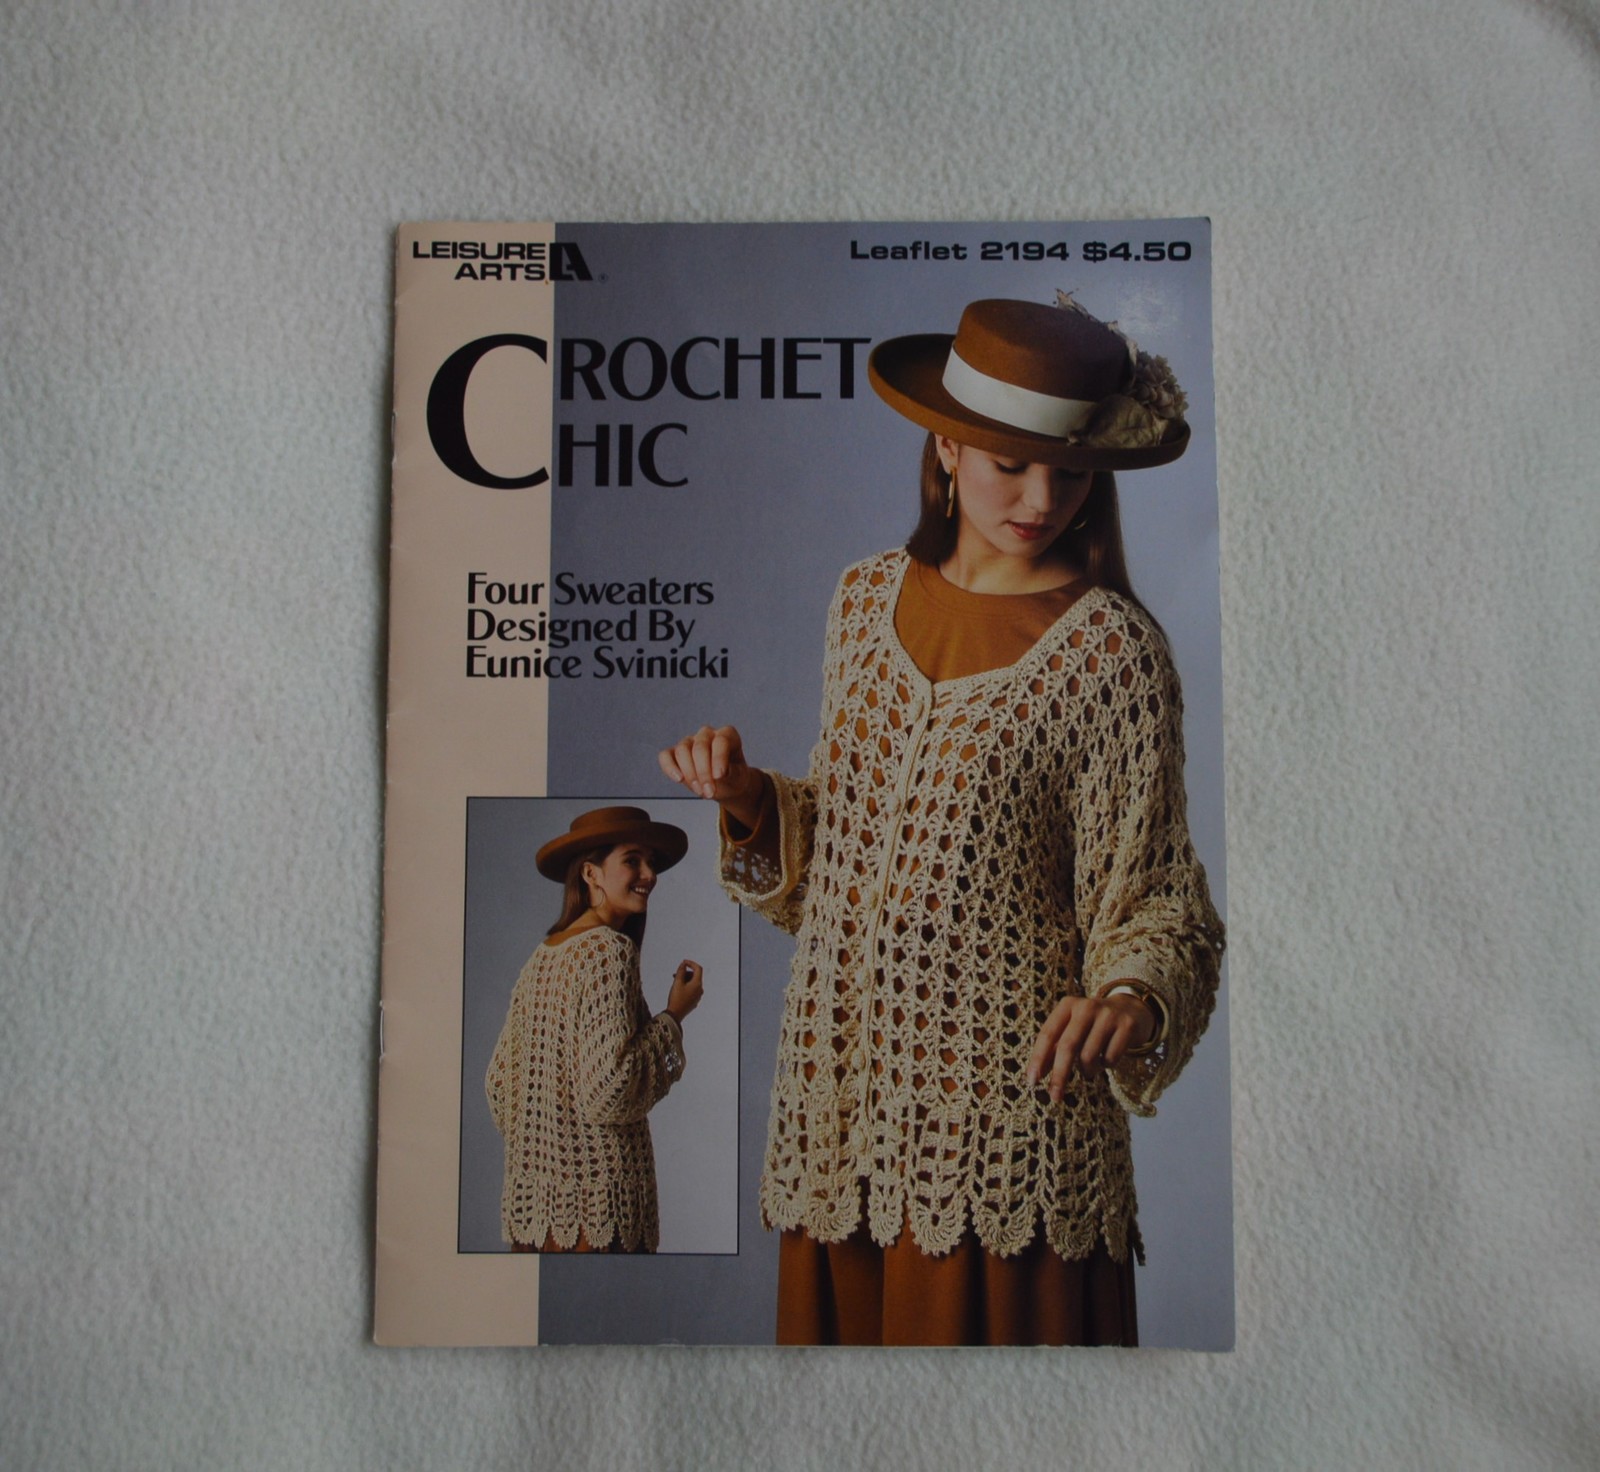 Crochet Chic Leisure Arts 1992 4 sweater pattern by Eunice Svinicki Leaflet 2194 - $10.00